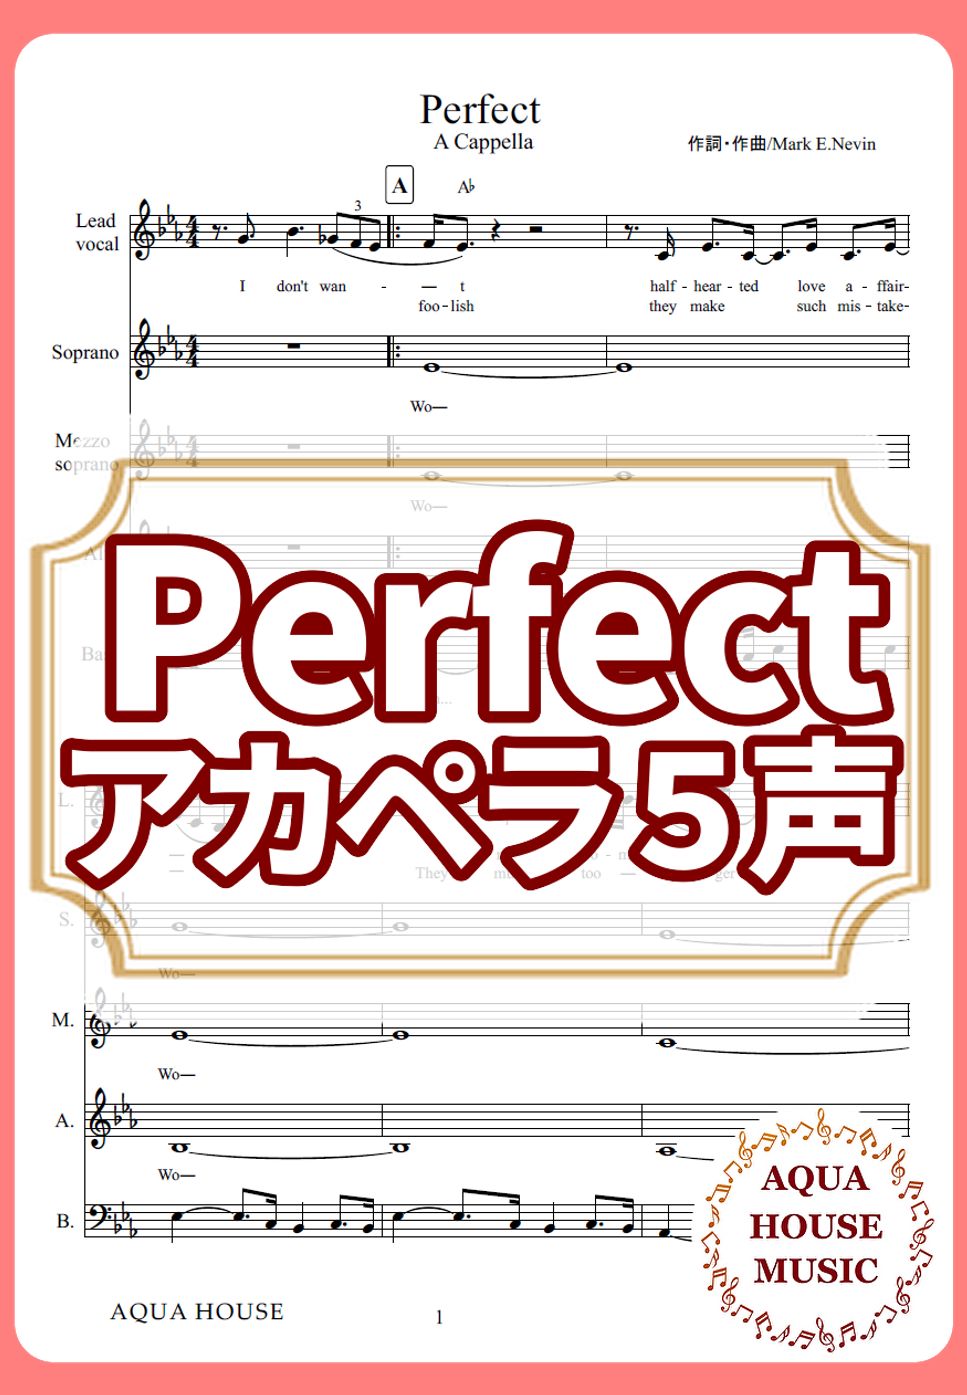 Fairground Attraction - Perfect (アカペラ楽譜♪5声ボイパなし) by 飯田 亜紗子